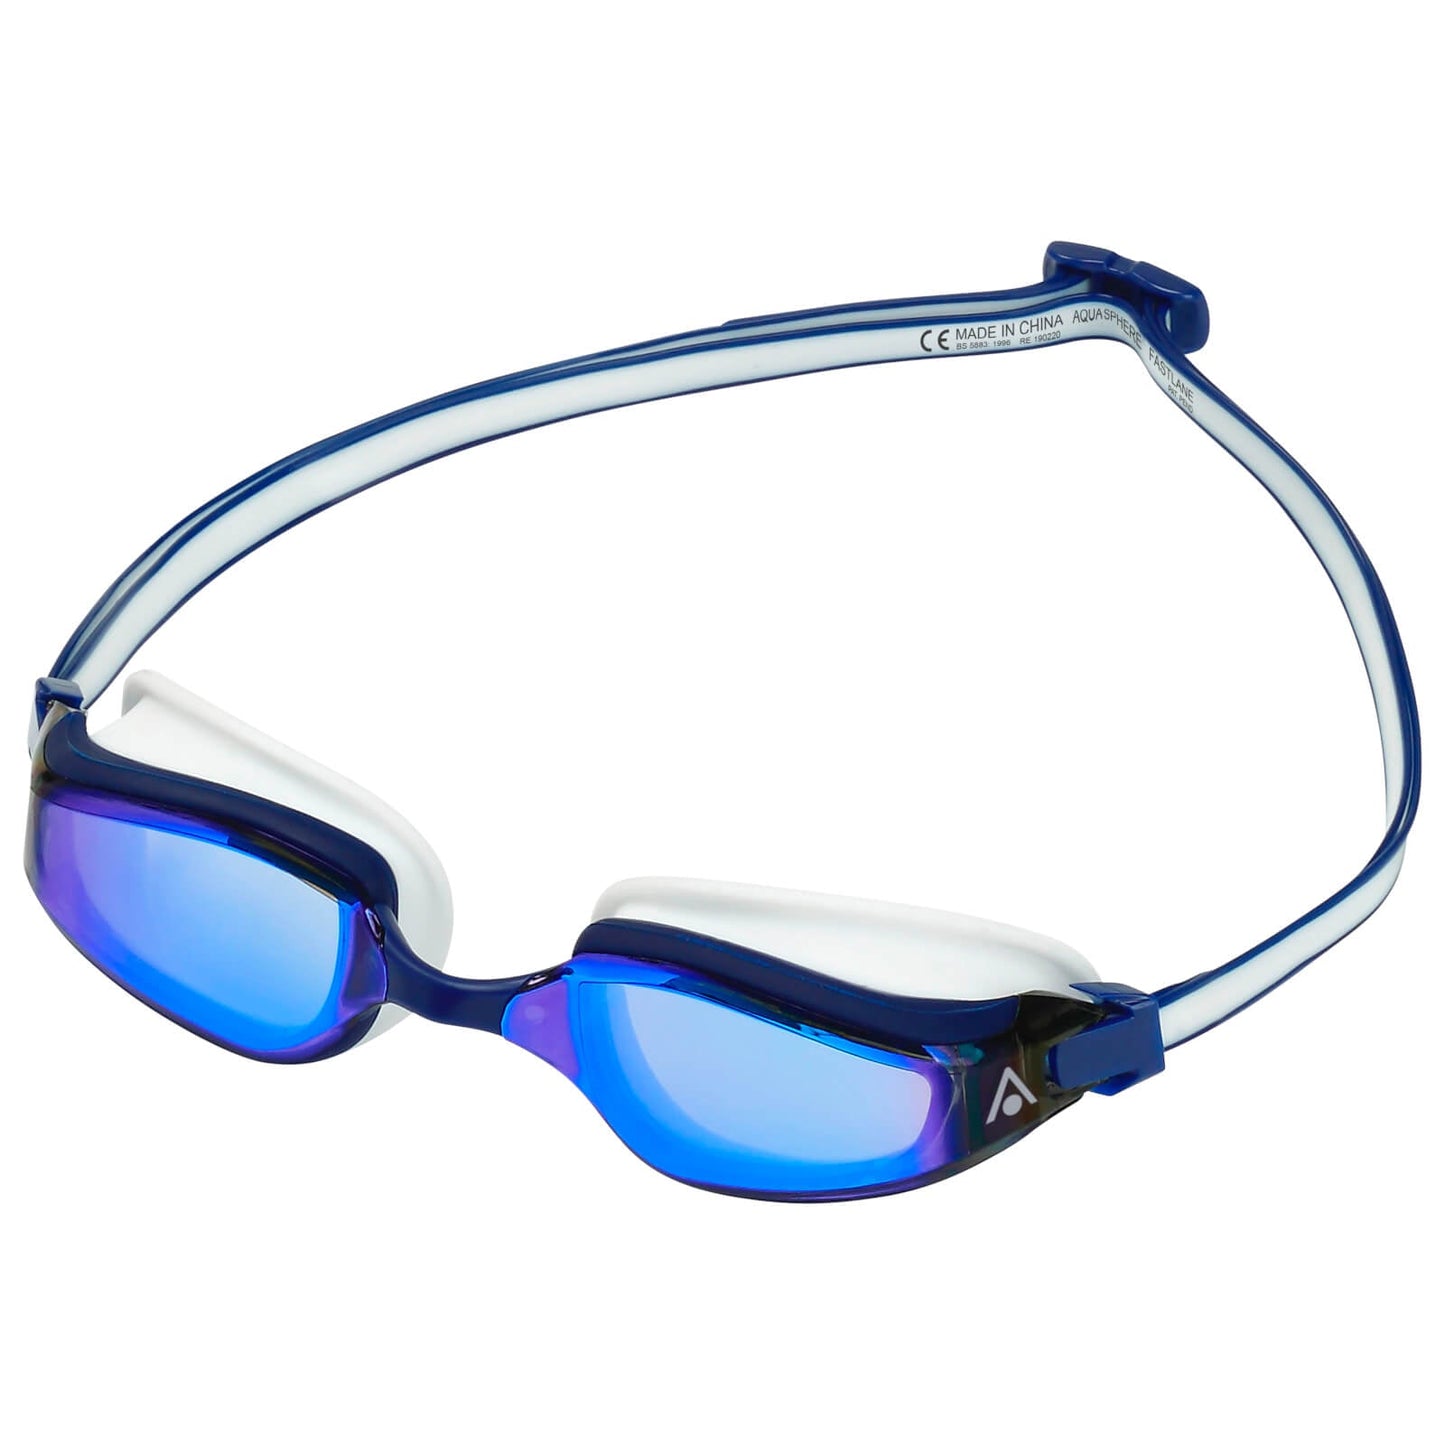 Men's Swimming Goggles Aqua Sphere Fastlane Adult Fitness Pool Blue/White - Blue Titanium Mirrored